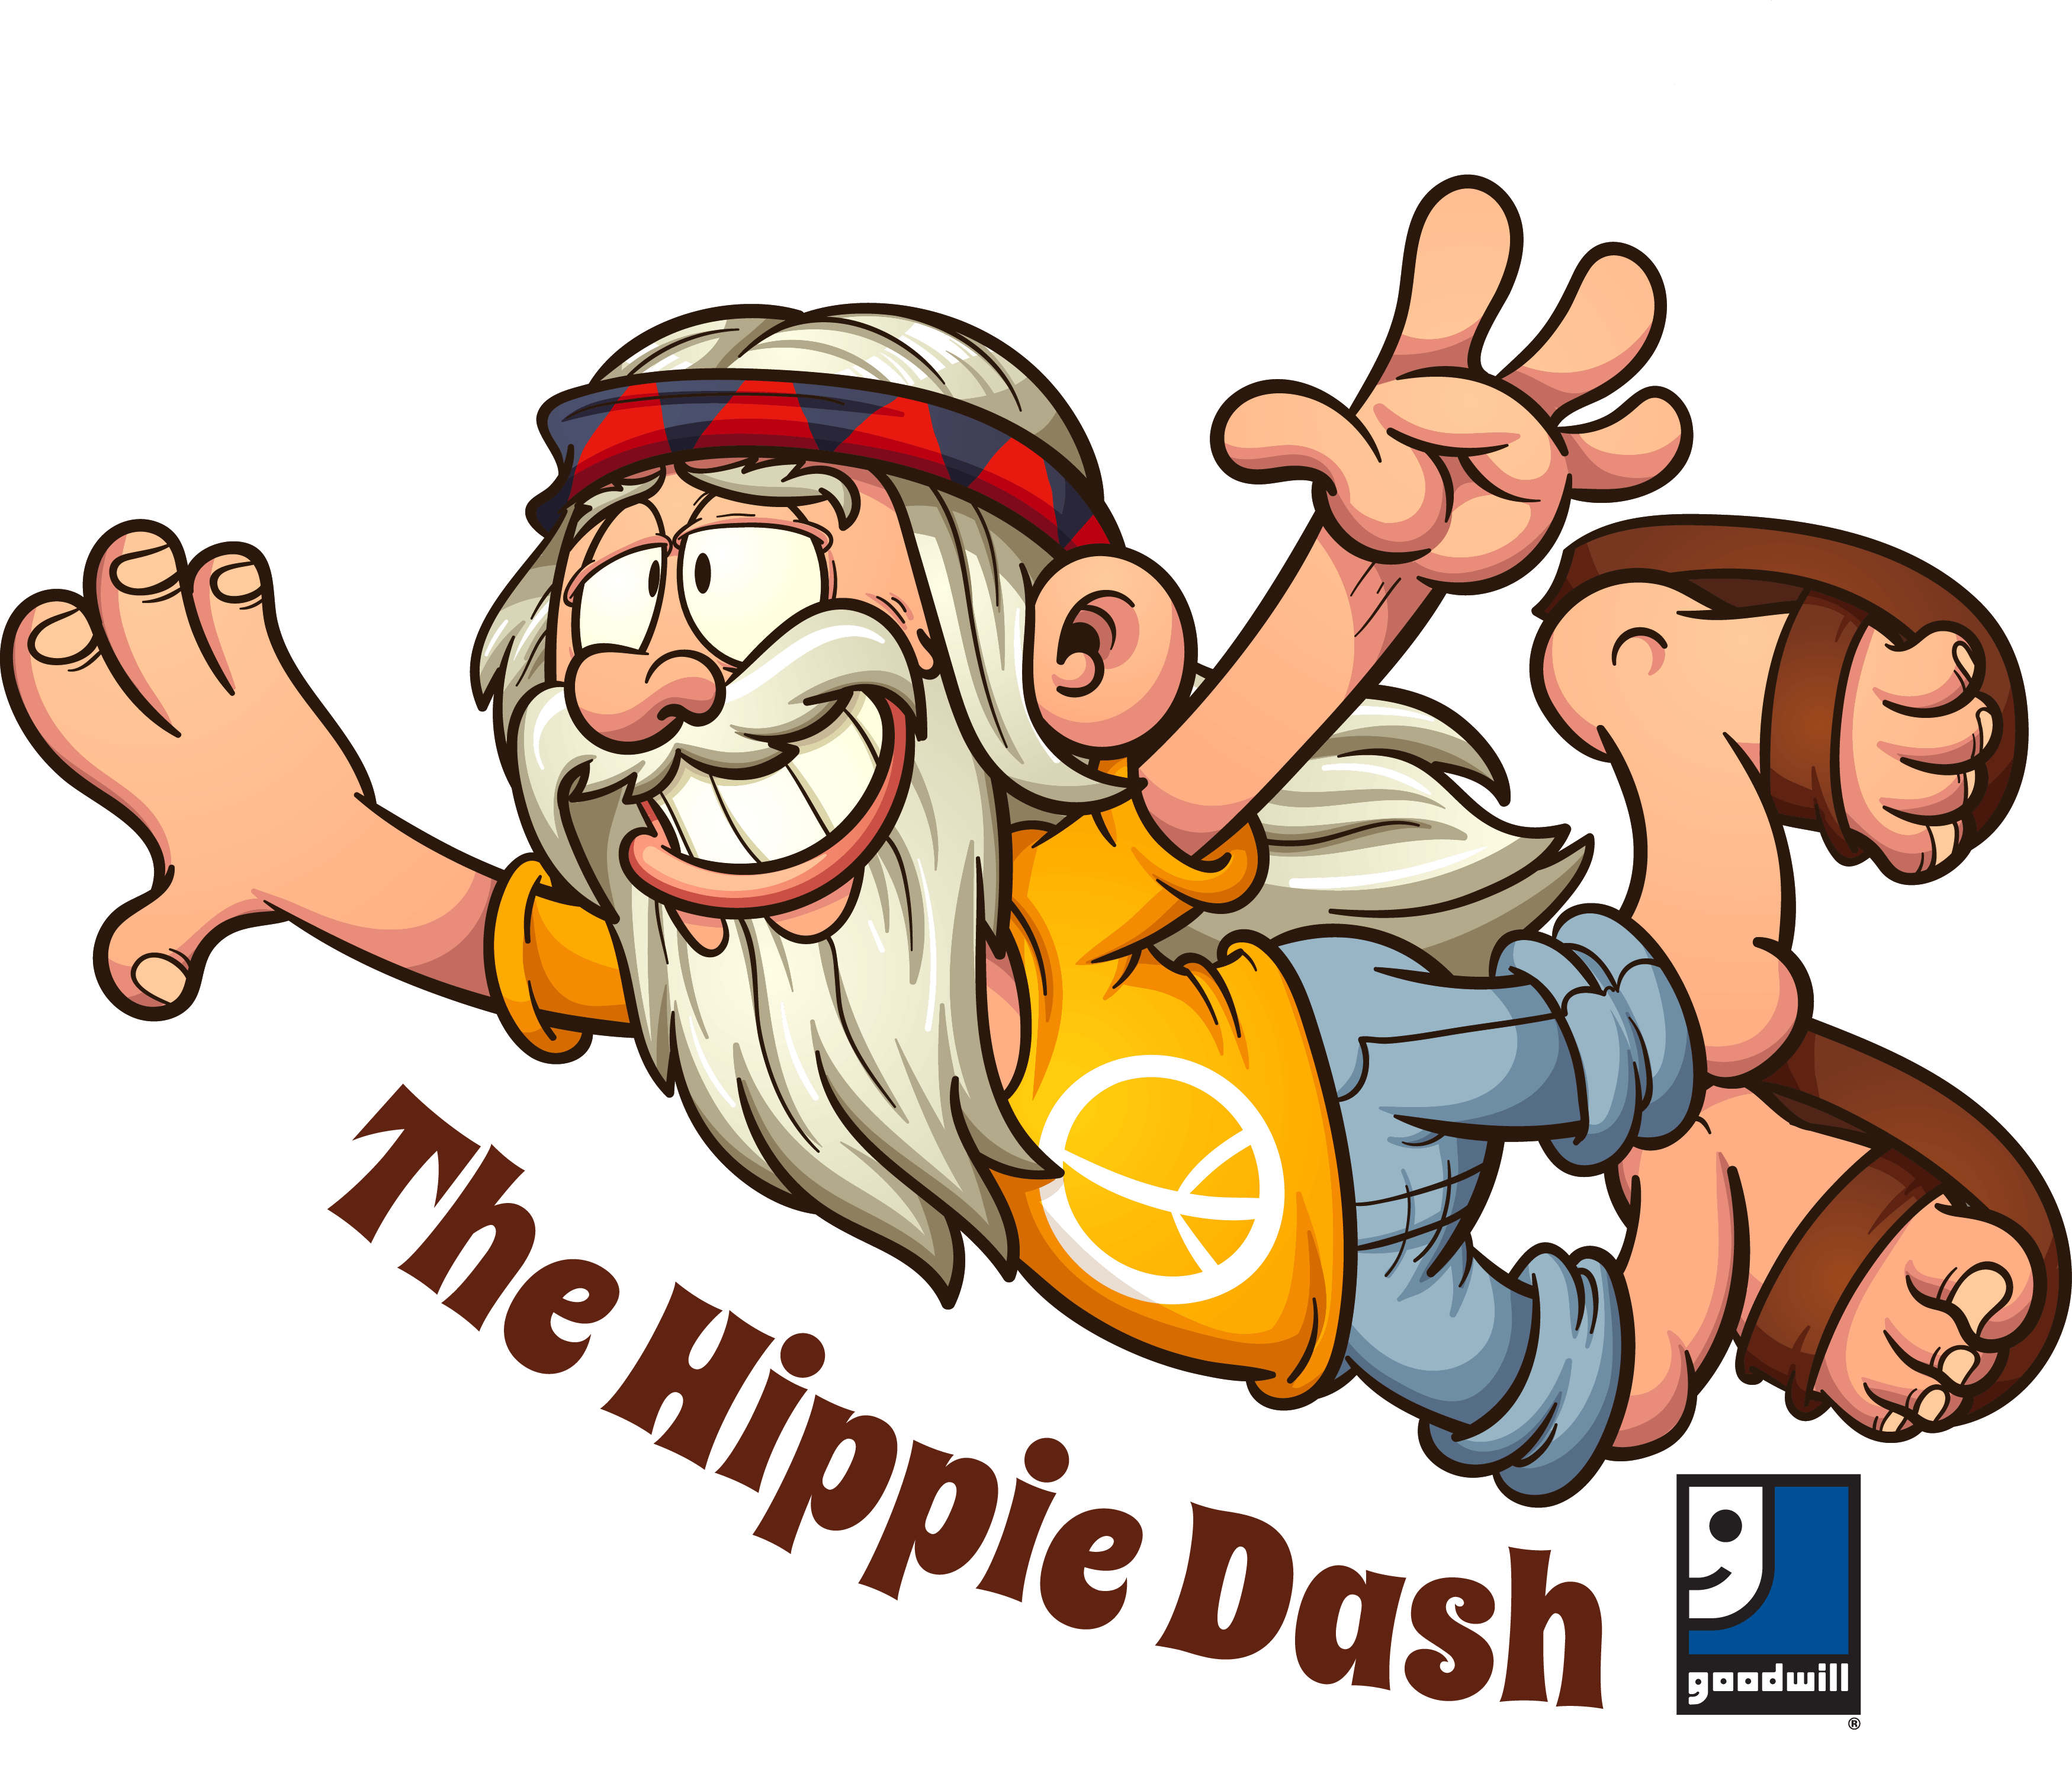 Fun Hippie Logo - The Hippie Dash 5K Employee Resources | Palmetto Goodwill